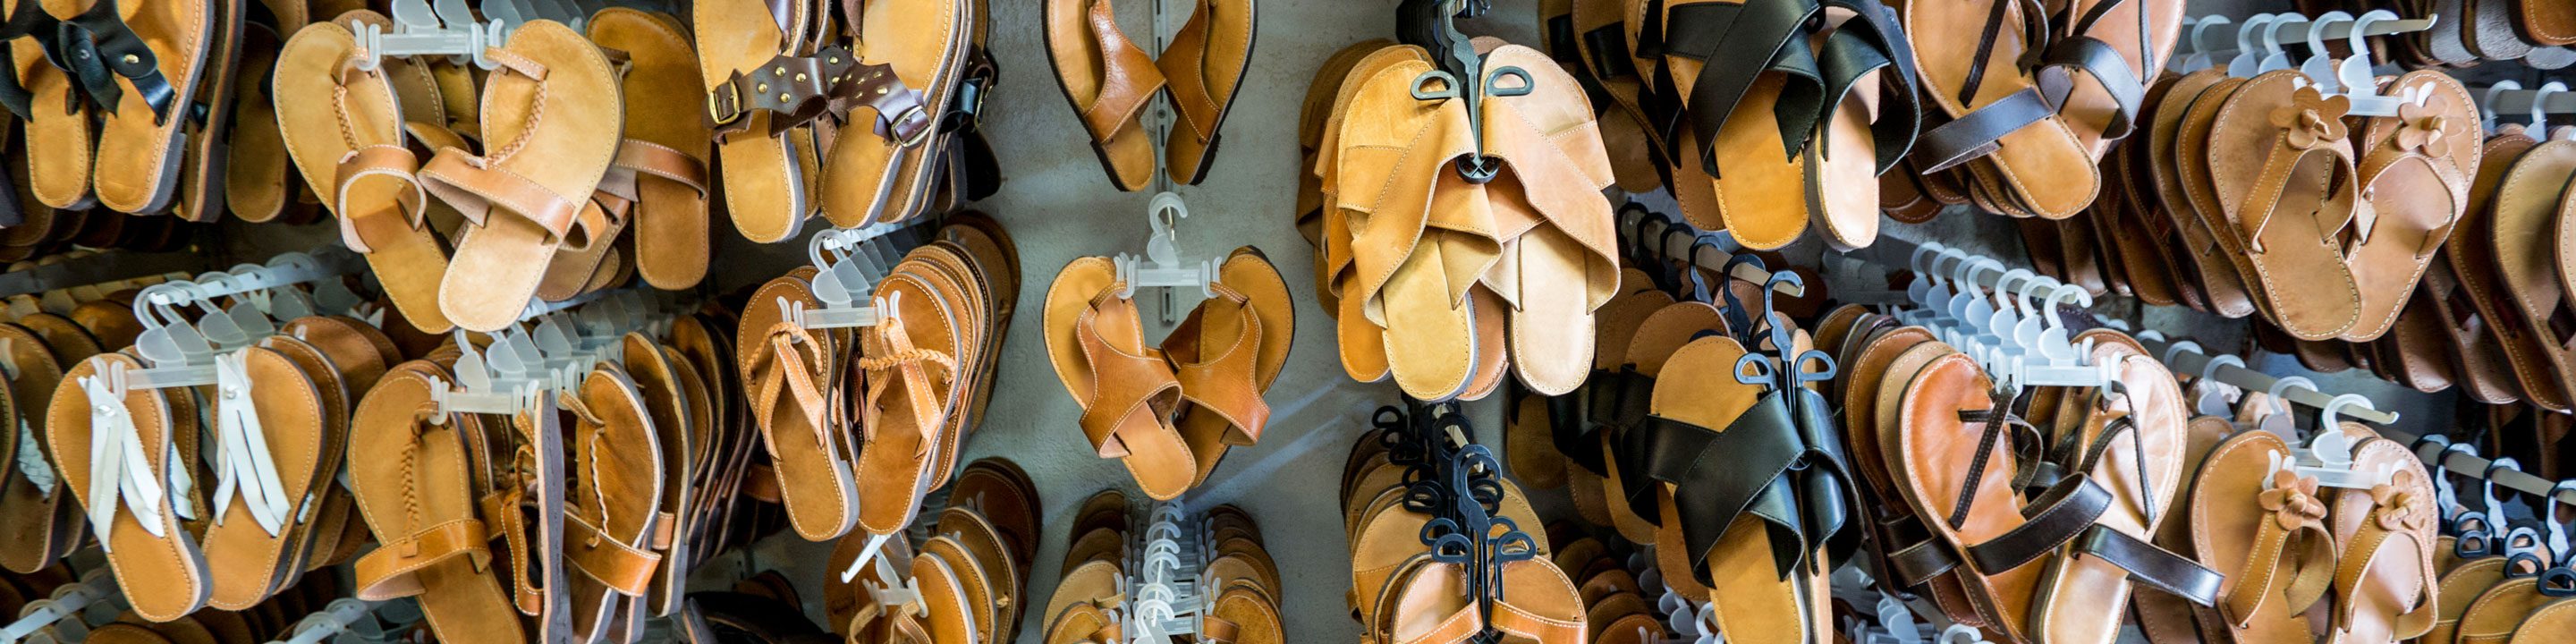 Greek handmade leather sandals